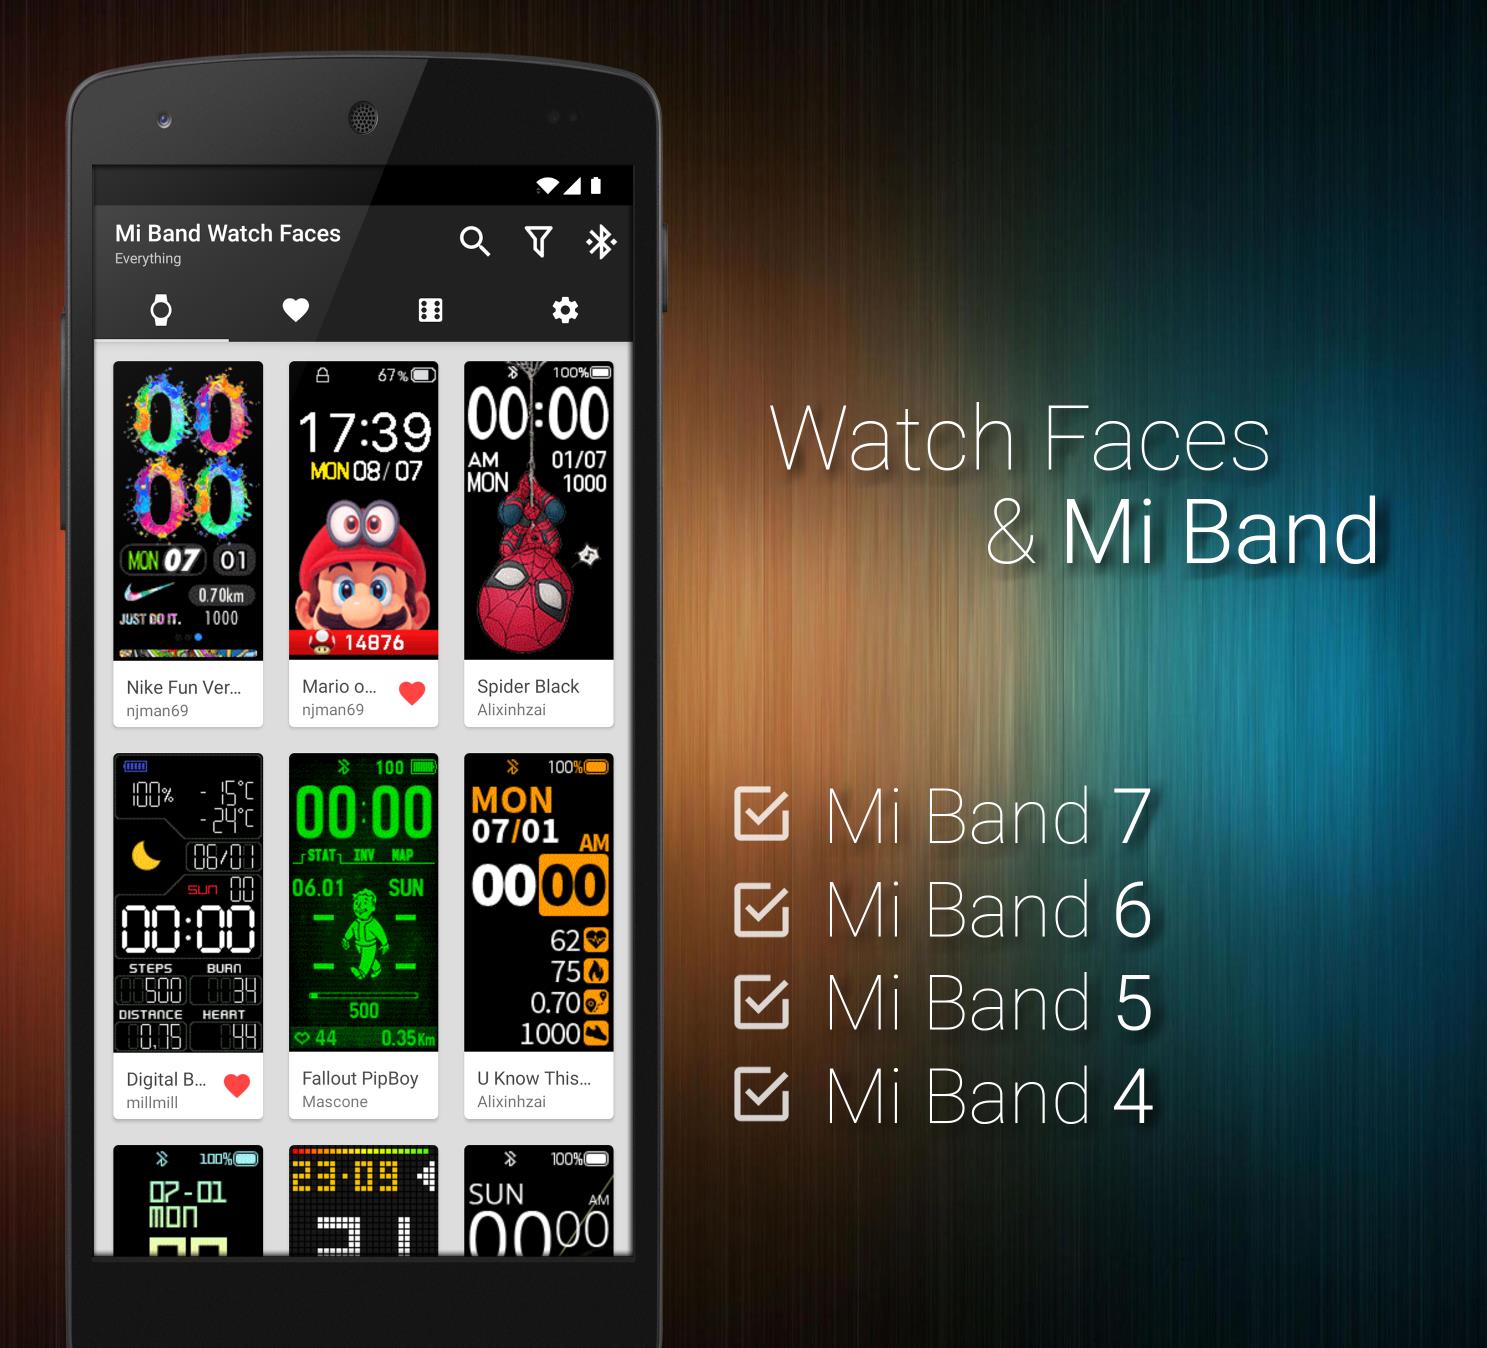 Amazfit Band 5 Watchfaces - Apps en Google Play